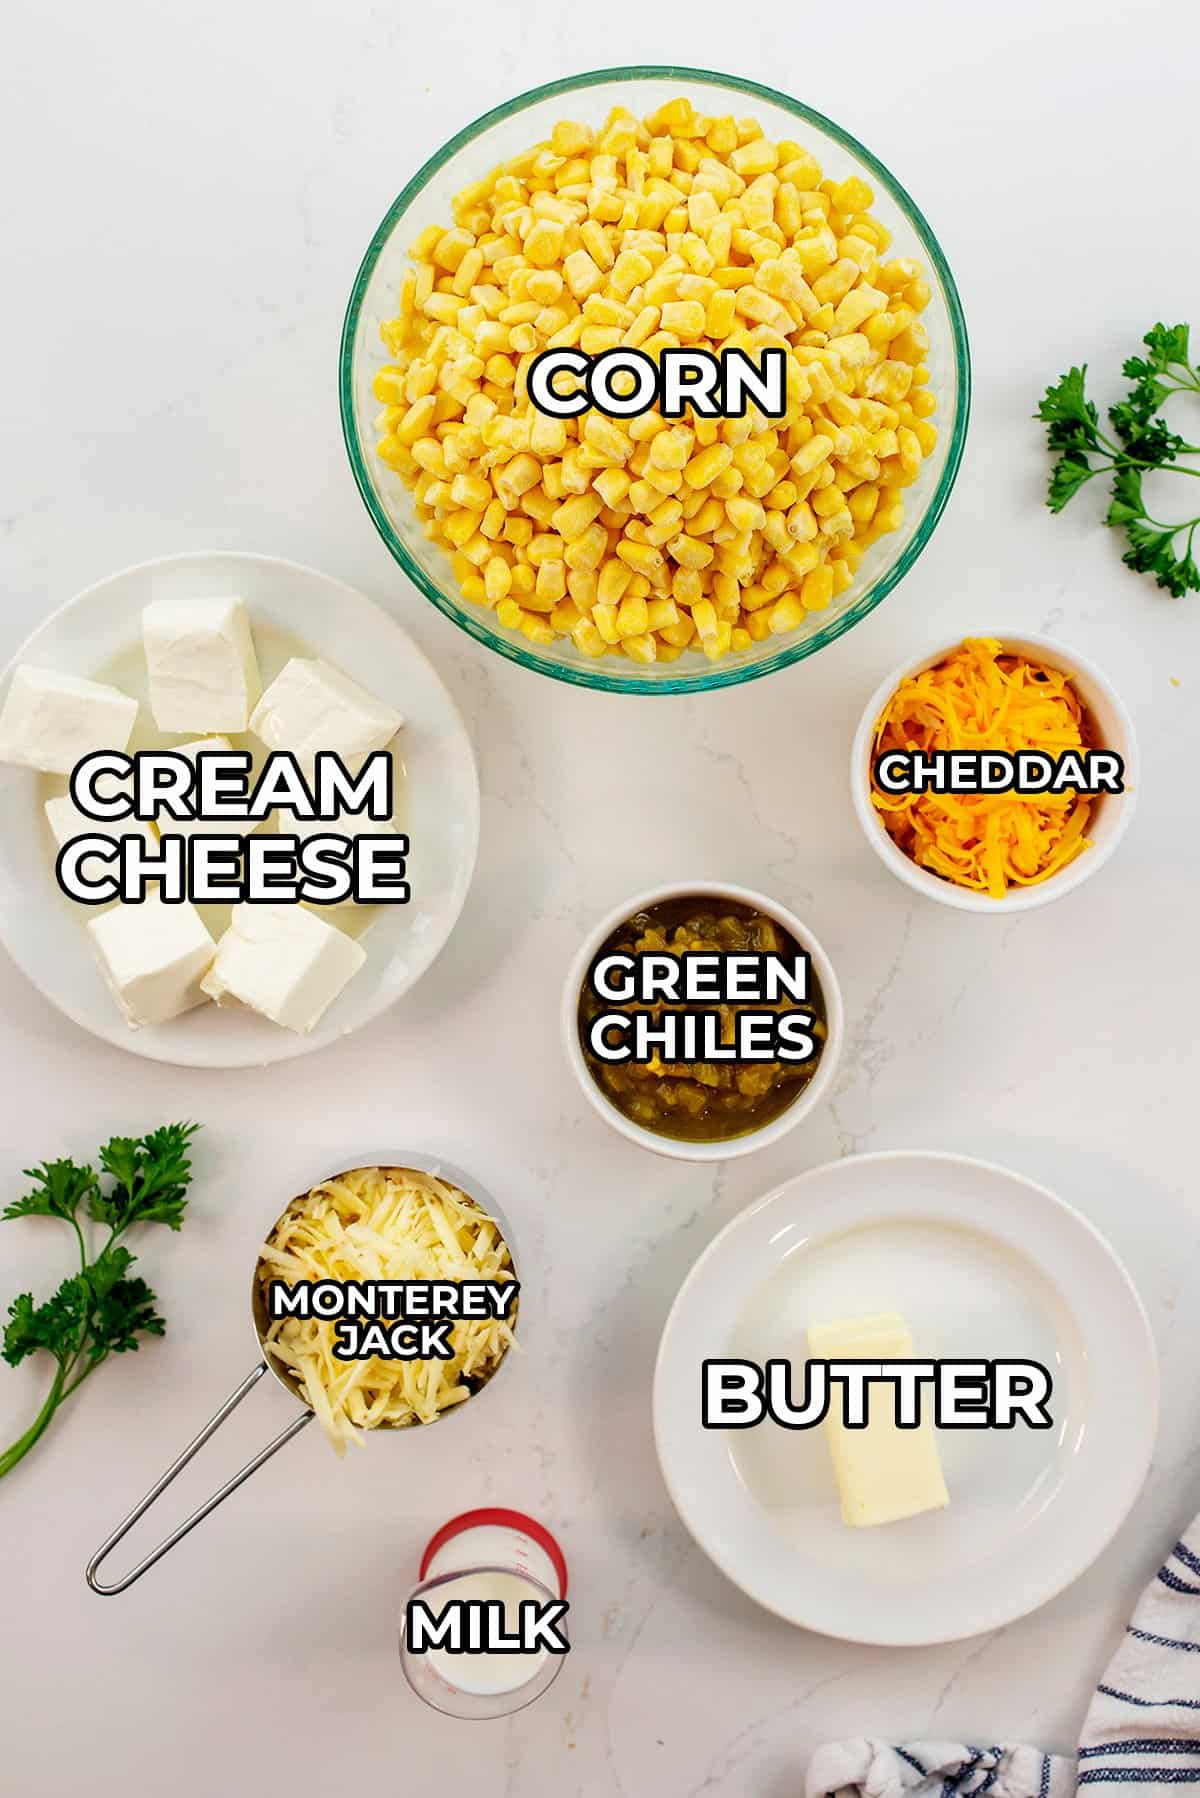 ingredients for cream cheese corn casserole.